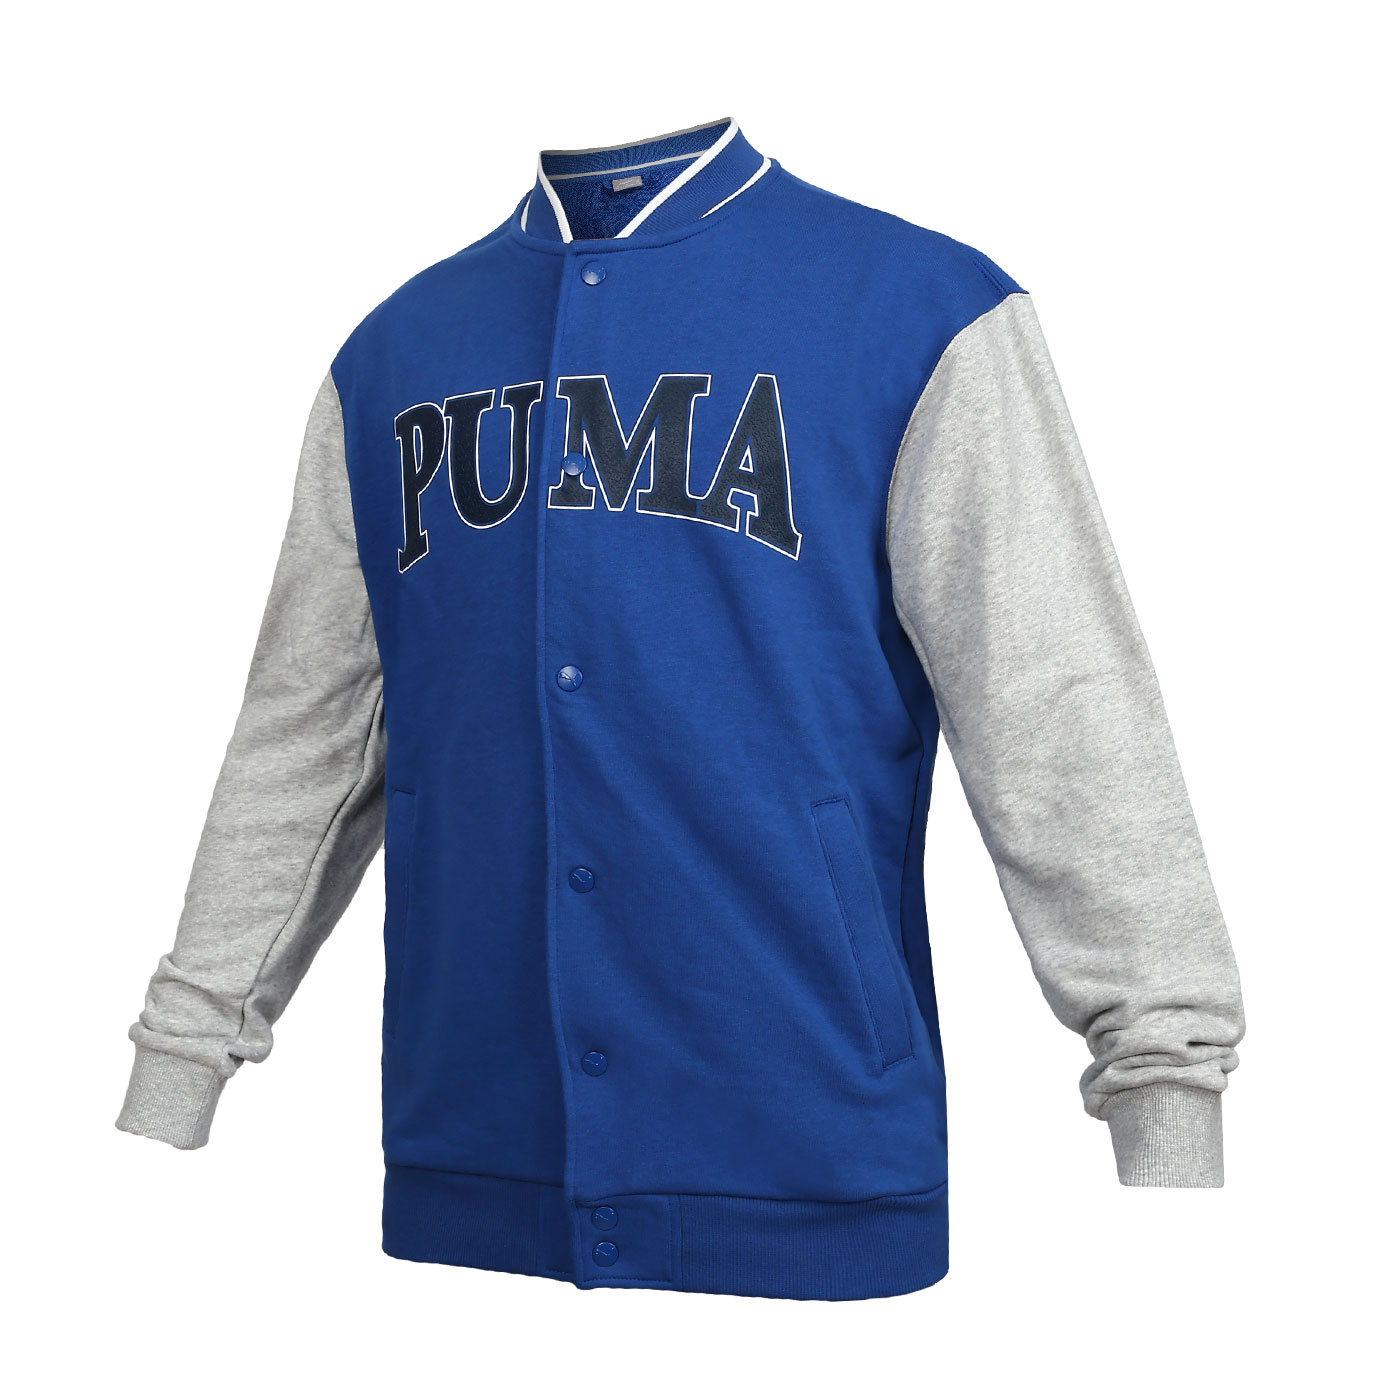 PUMA 男款基本系列Squad棒球外套  67897117 - 藍黑白